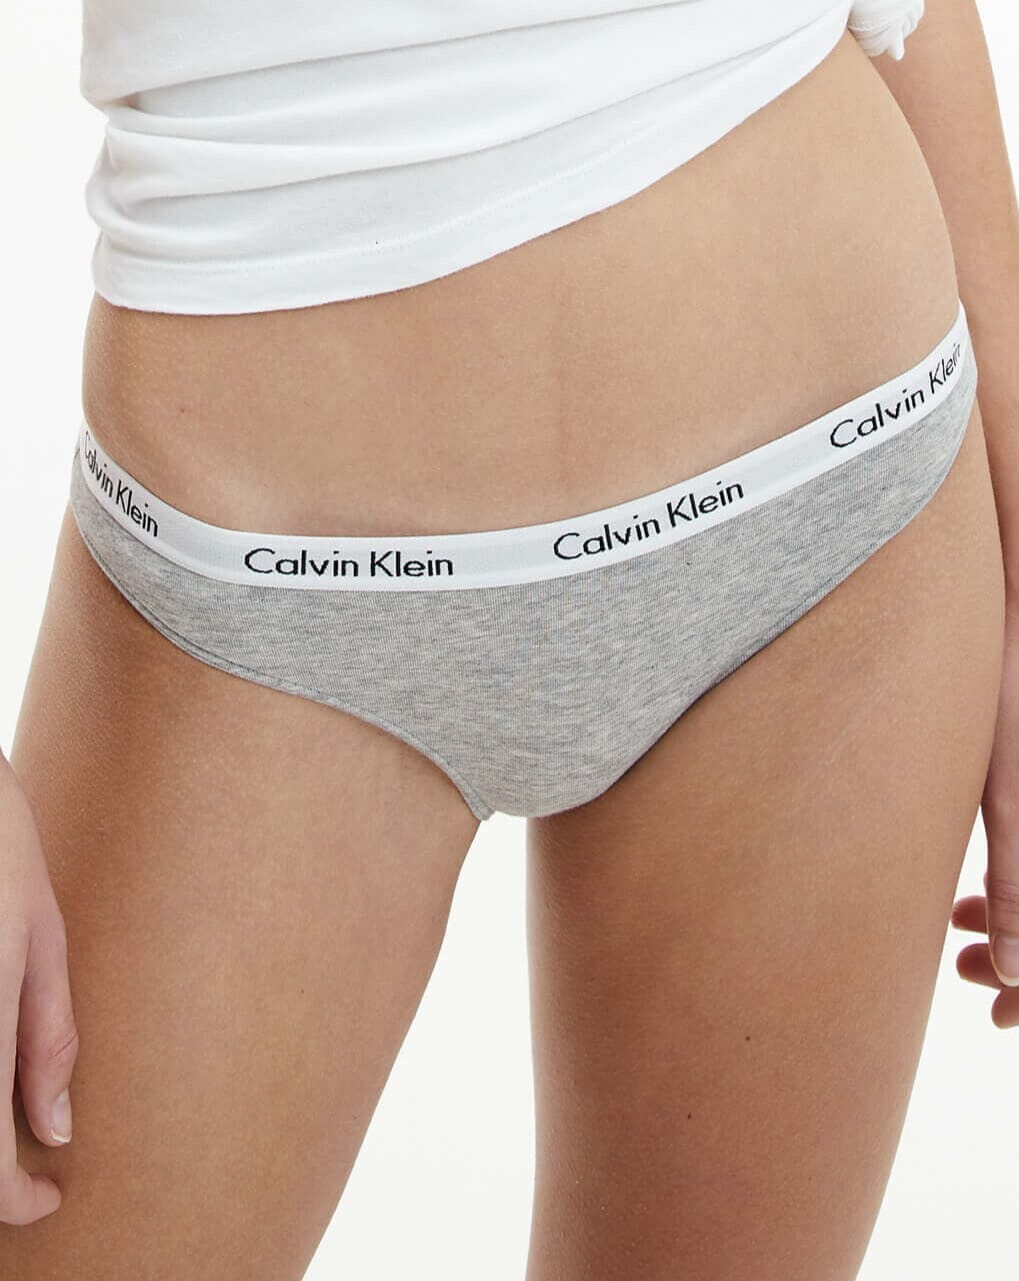 Calvin Klein Carousel 3 Pack Bikini Brief - Black/Grey Heather/White -  Curvy Bras